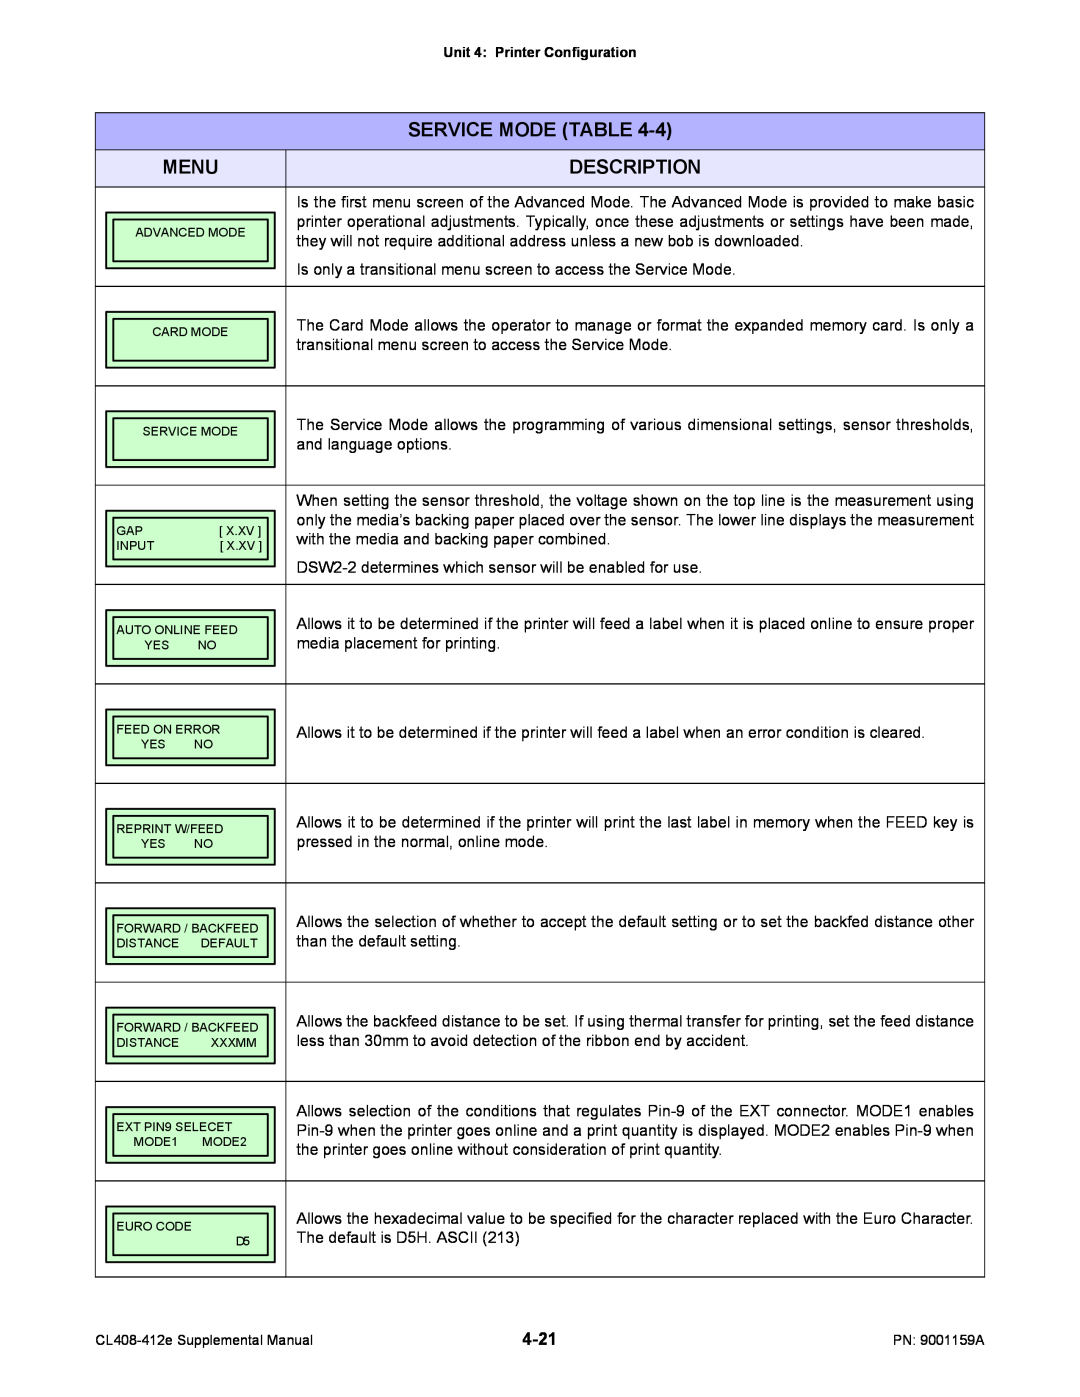 SATO CL408-412e manual Service Mode Table, Description, Menu 